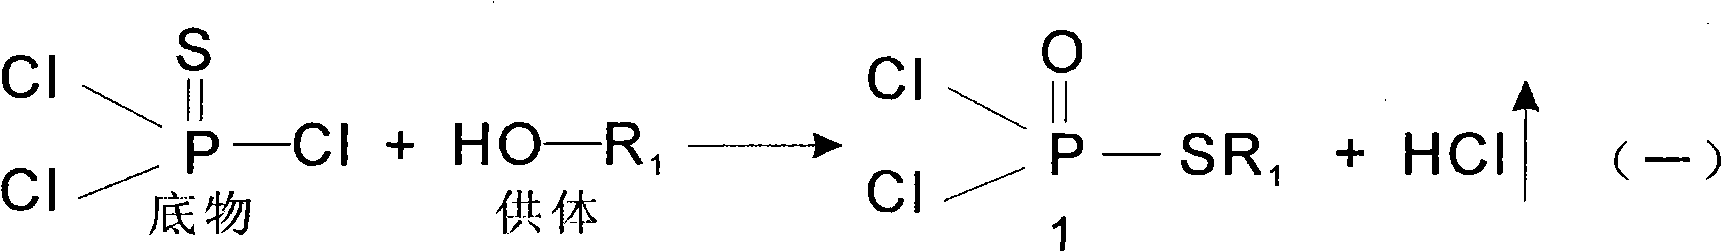 Isomerization reaction